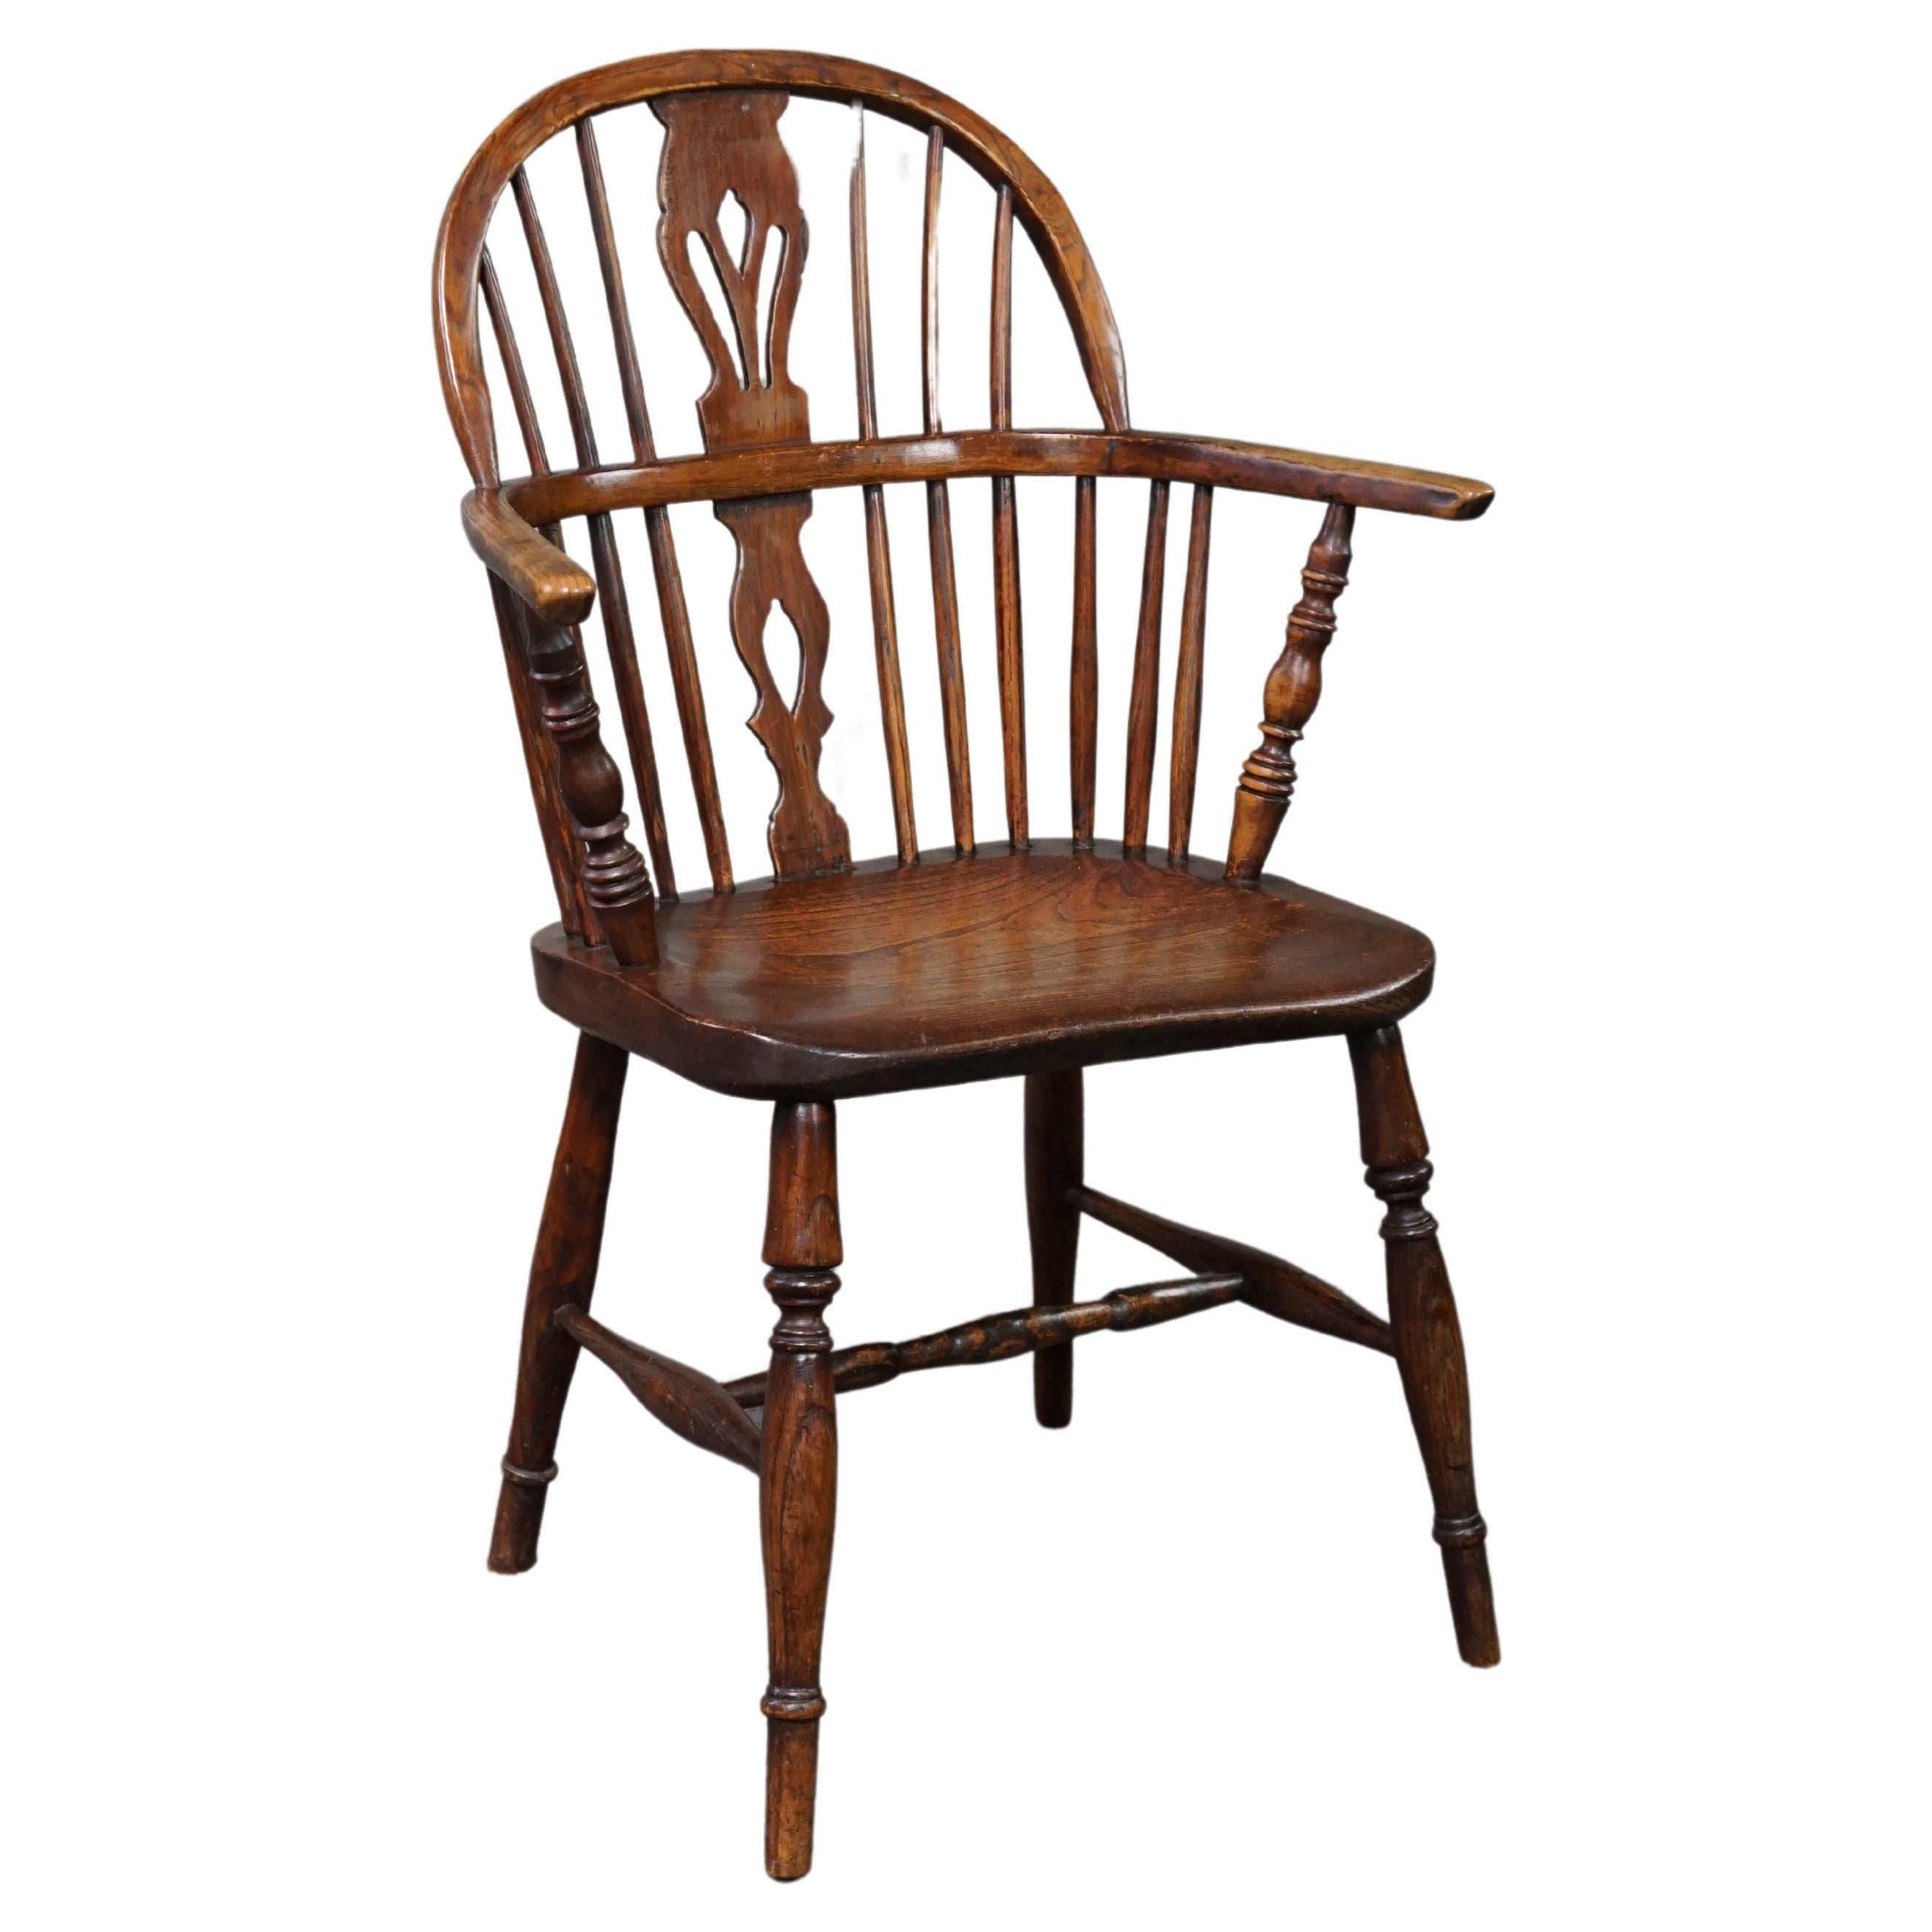 Ancienne chaise Windsor à dossier bas, 18e siècle